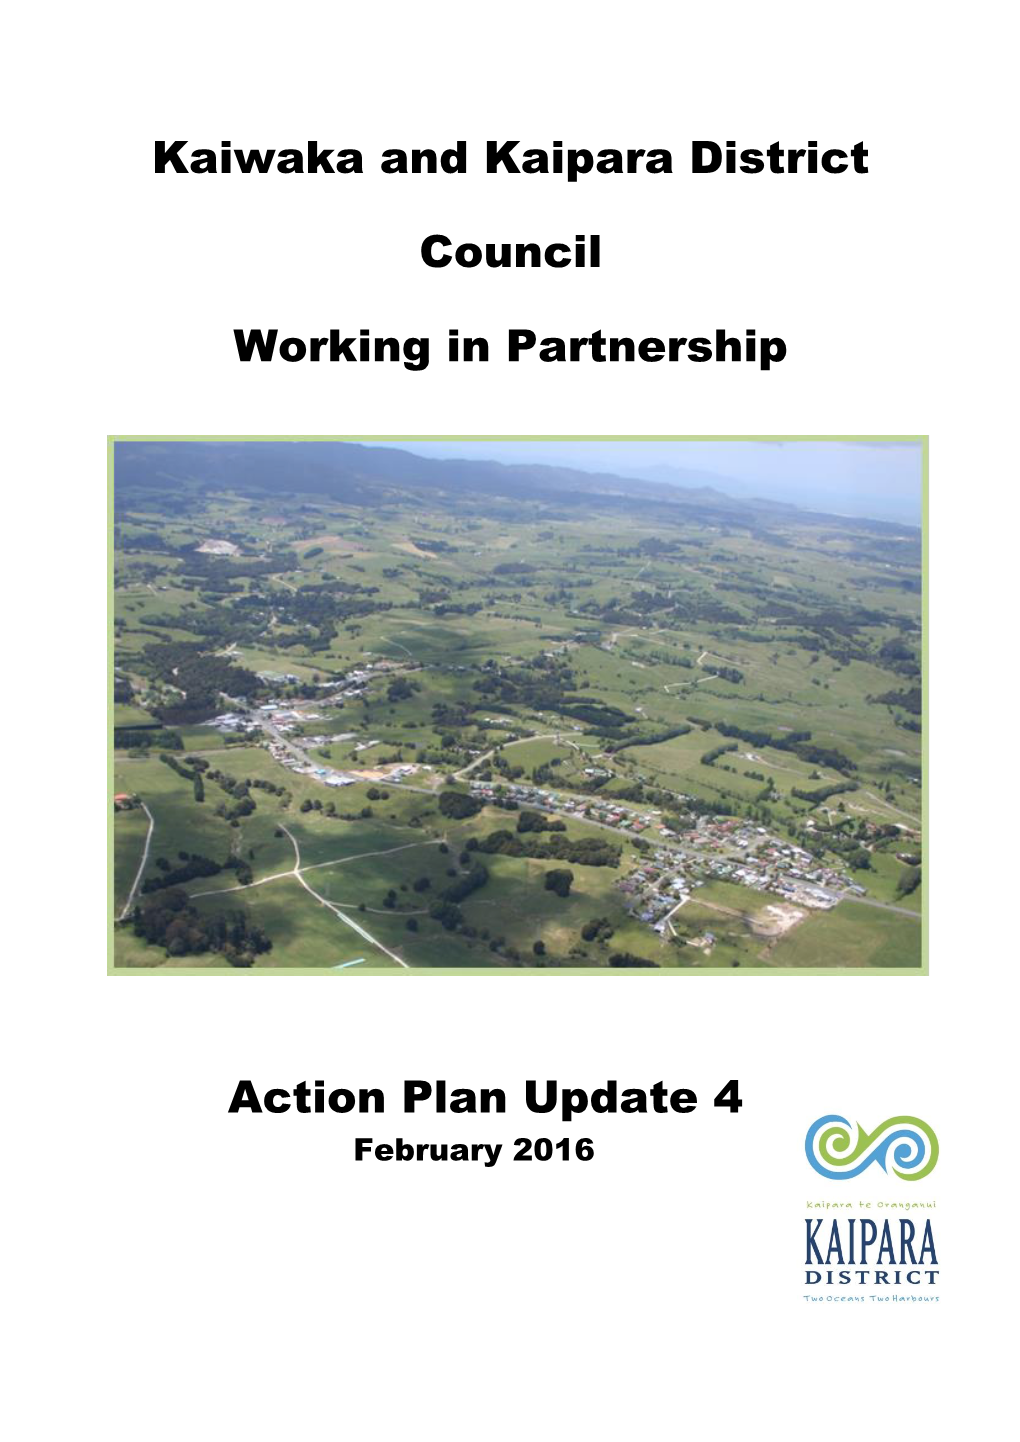 Kaiwaka and Kaipara District Council Working in Partnership Action Plan